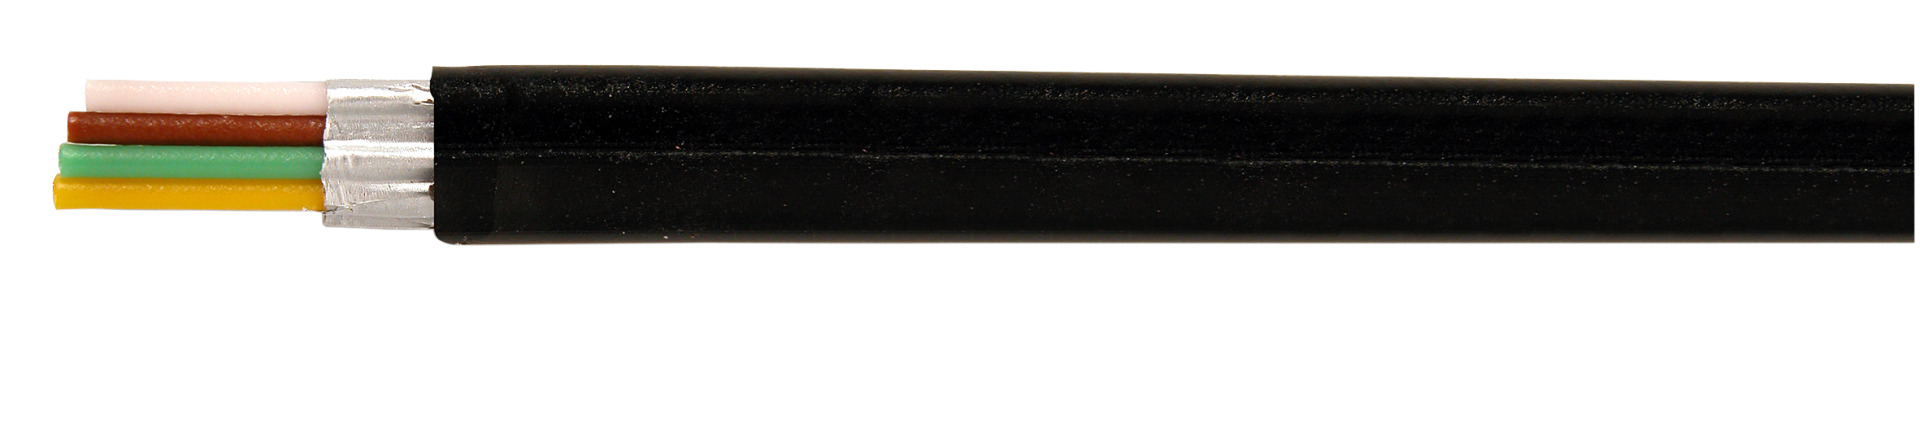 Modular Flat Cable 4-pole shielded, black, 100 m reel